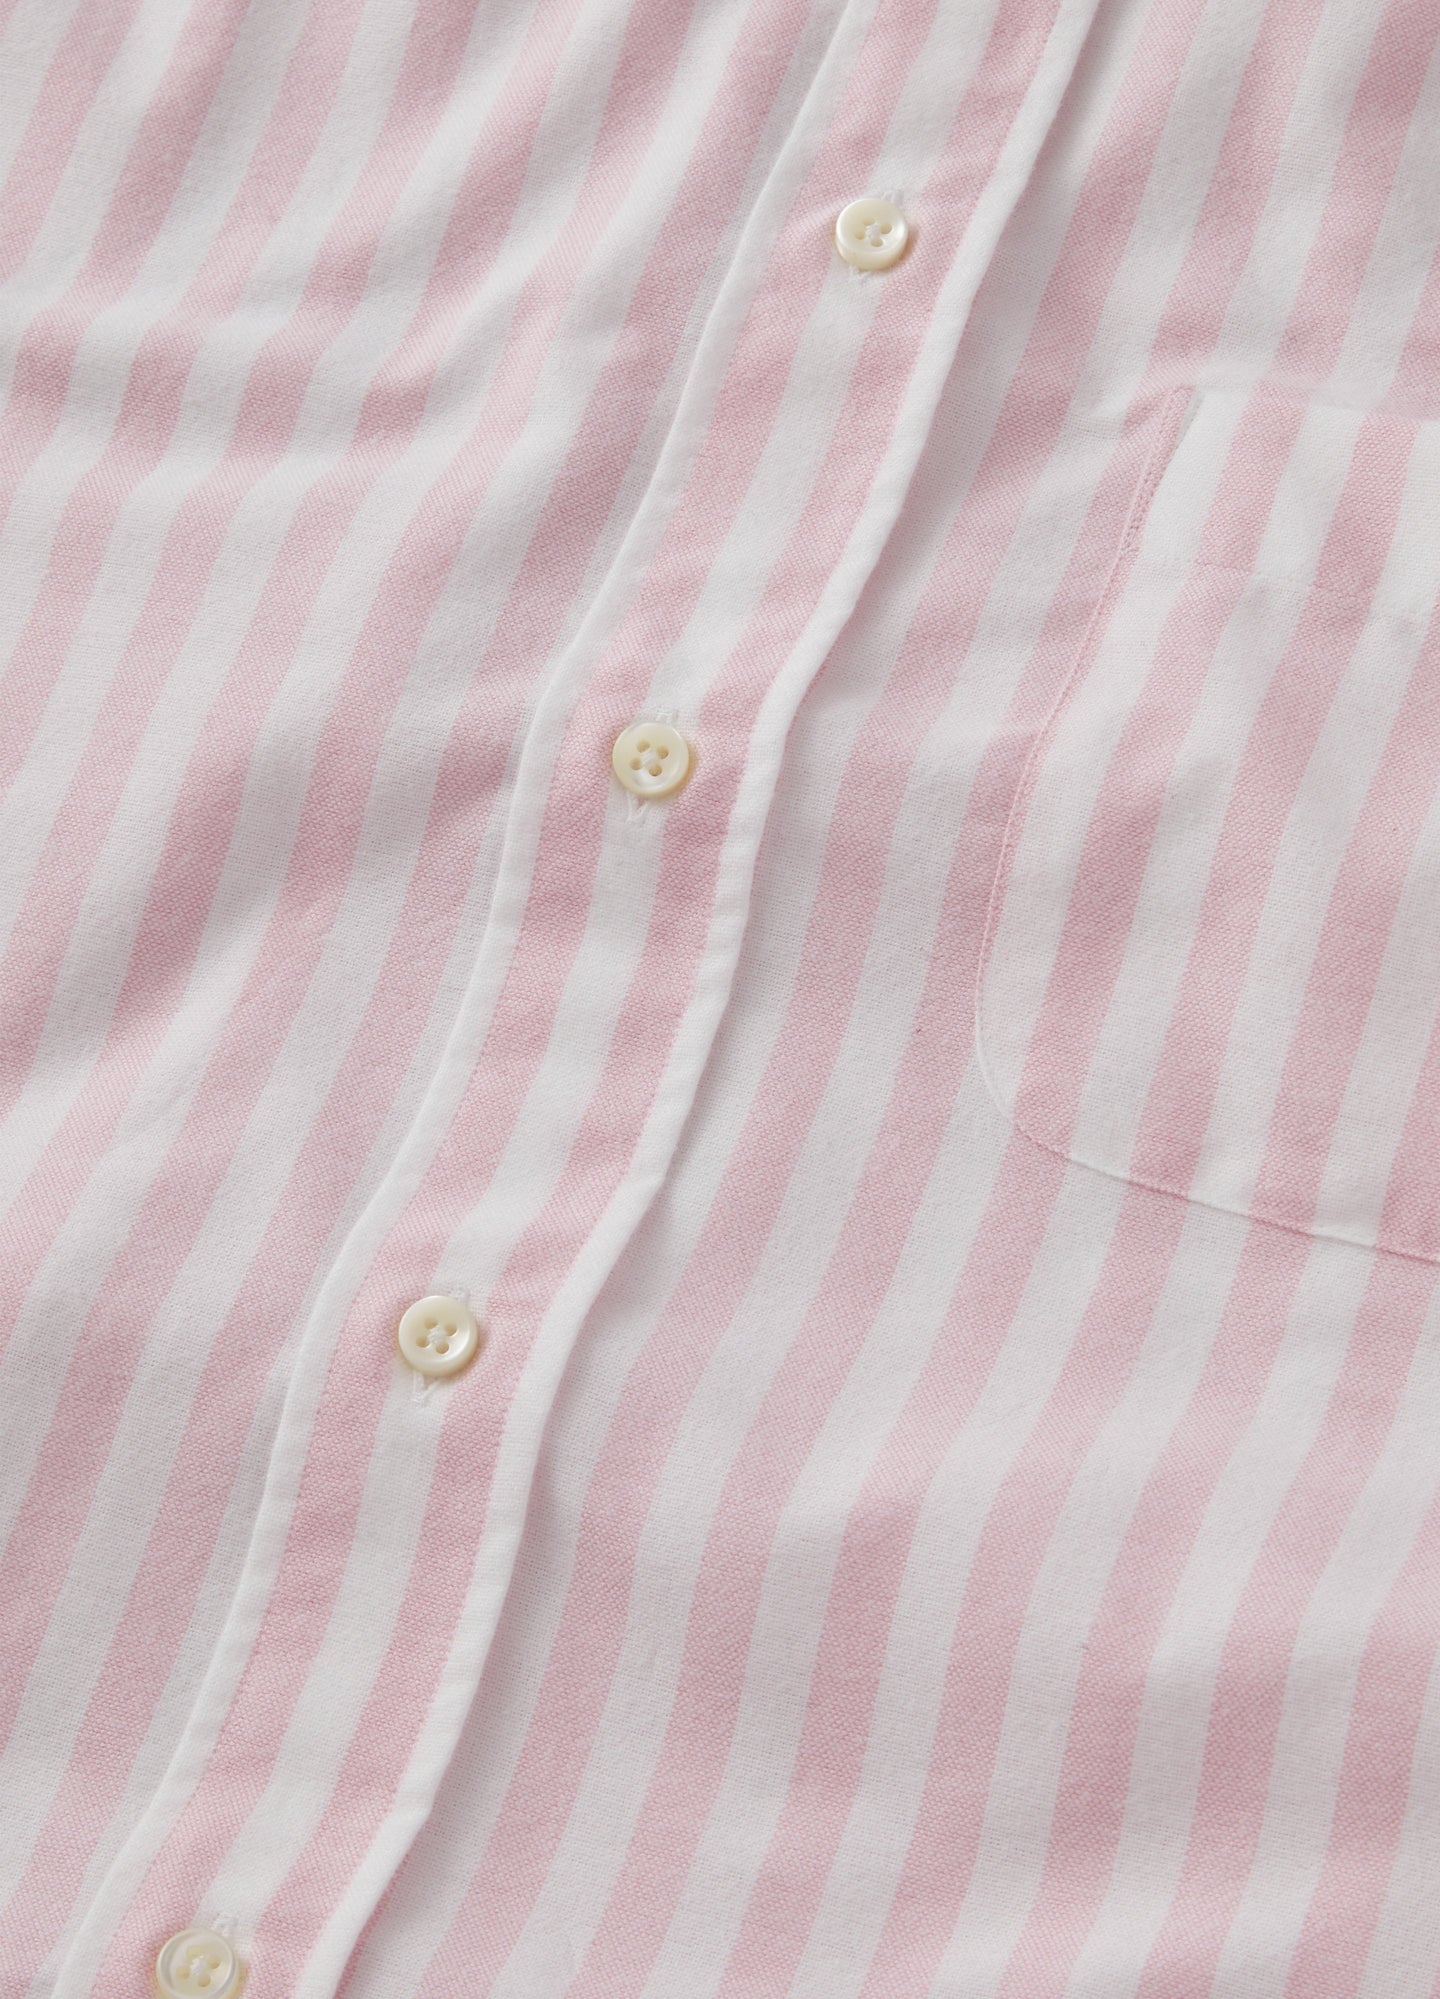 Ferdinand Button Down Shirt - Pink/White Berg & Berg